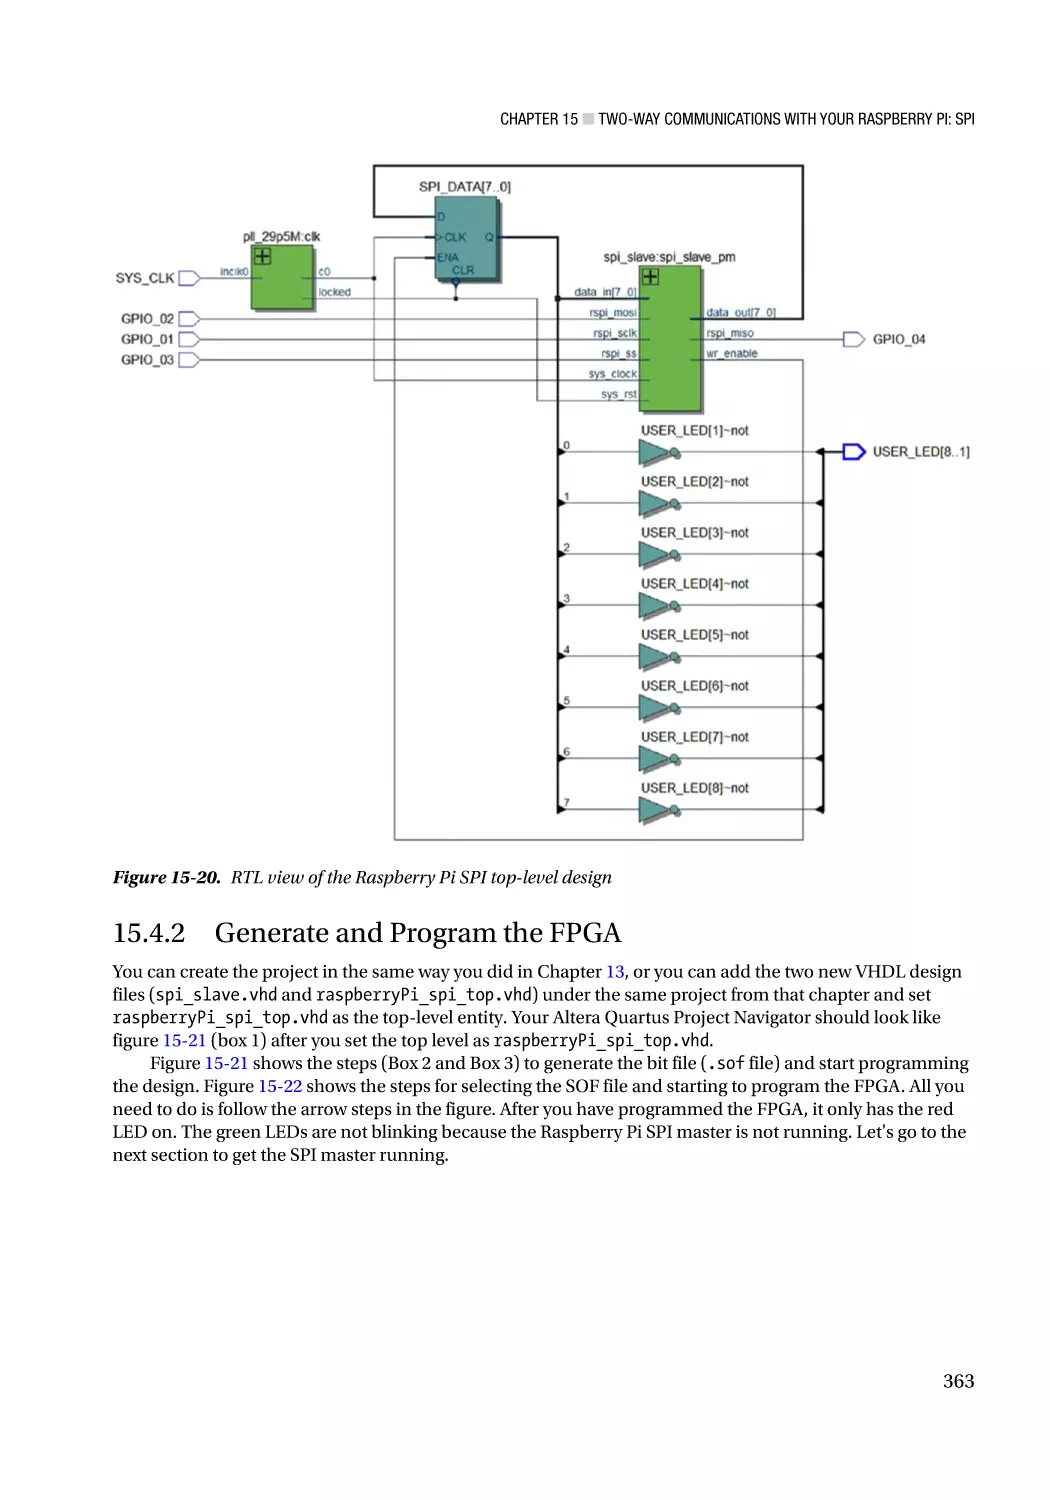 15.4.2 Generate and Program the FPGA